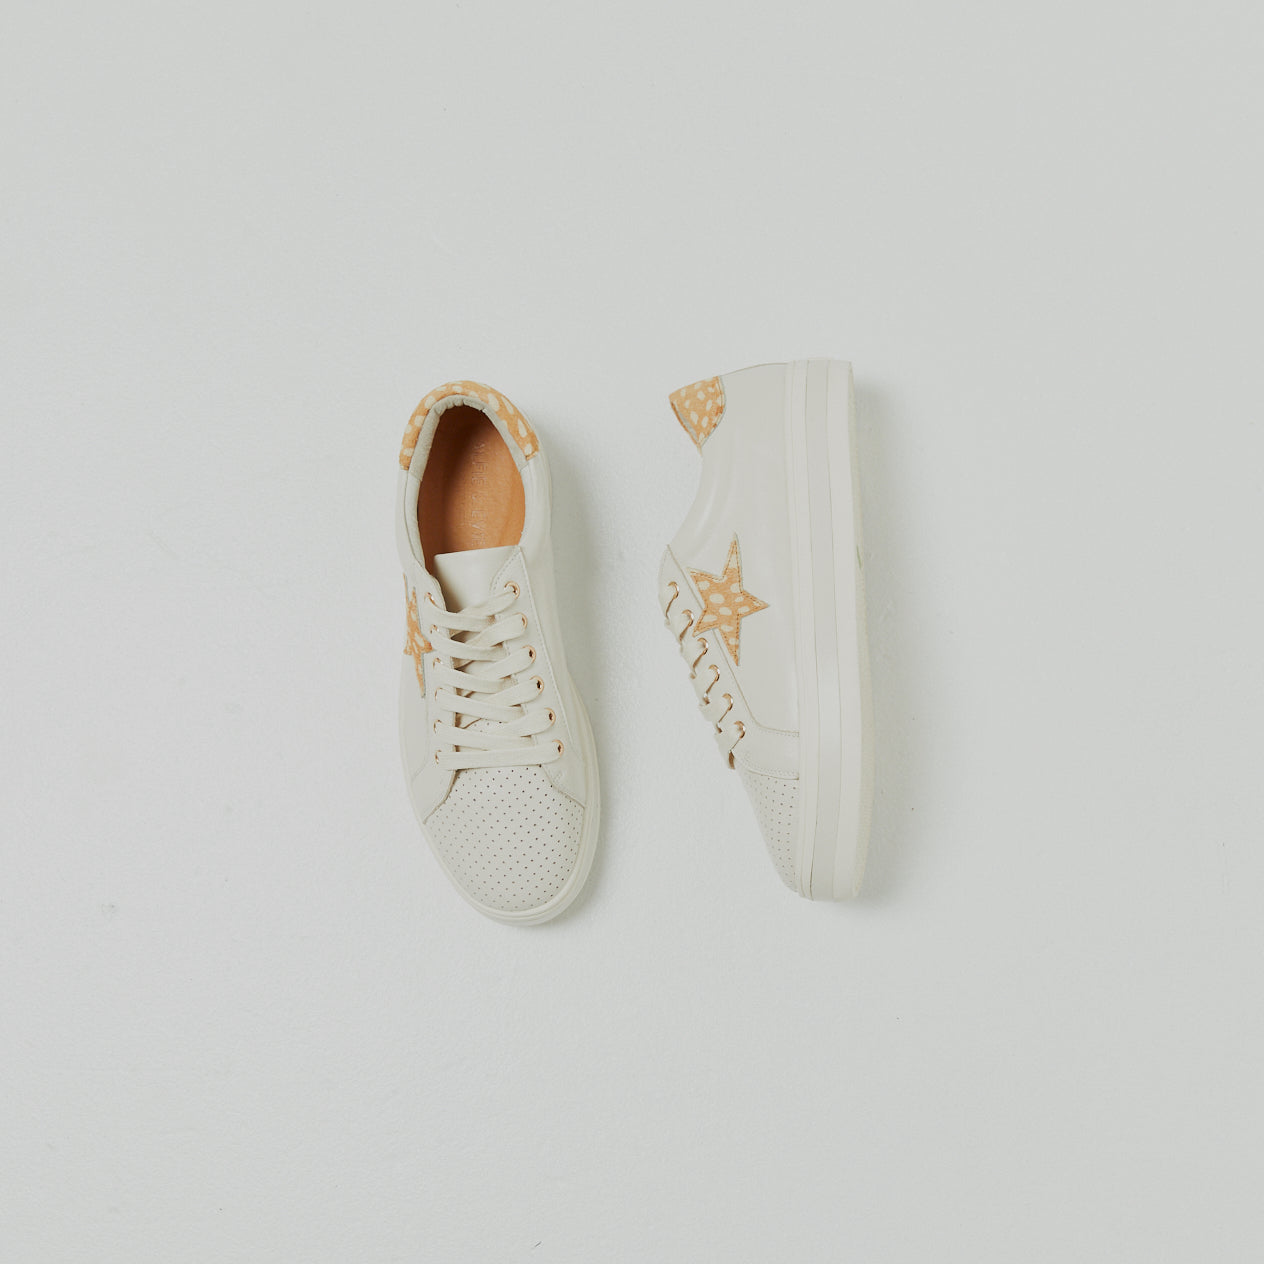 Platform sneaker in cream with Tan deer print star detail